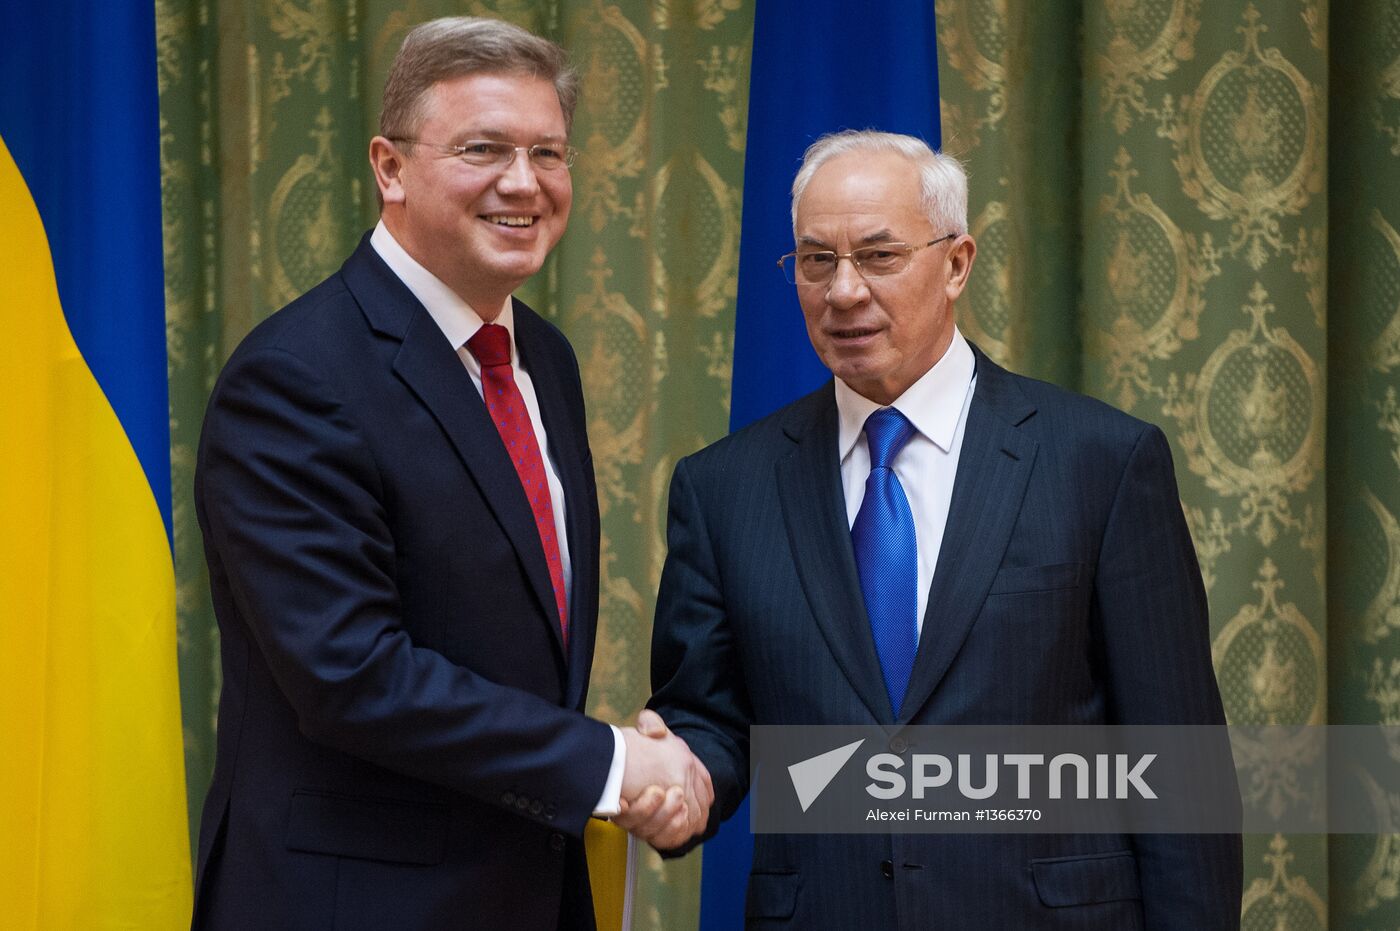 European Commissioner Stefan Fule meets with Ukraine's premier